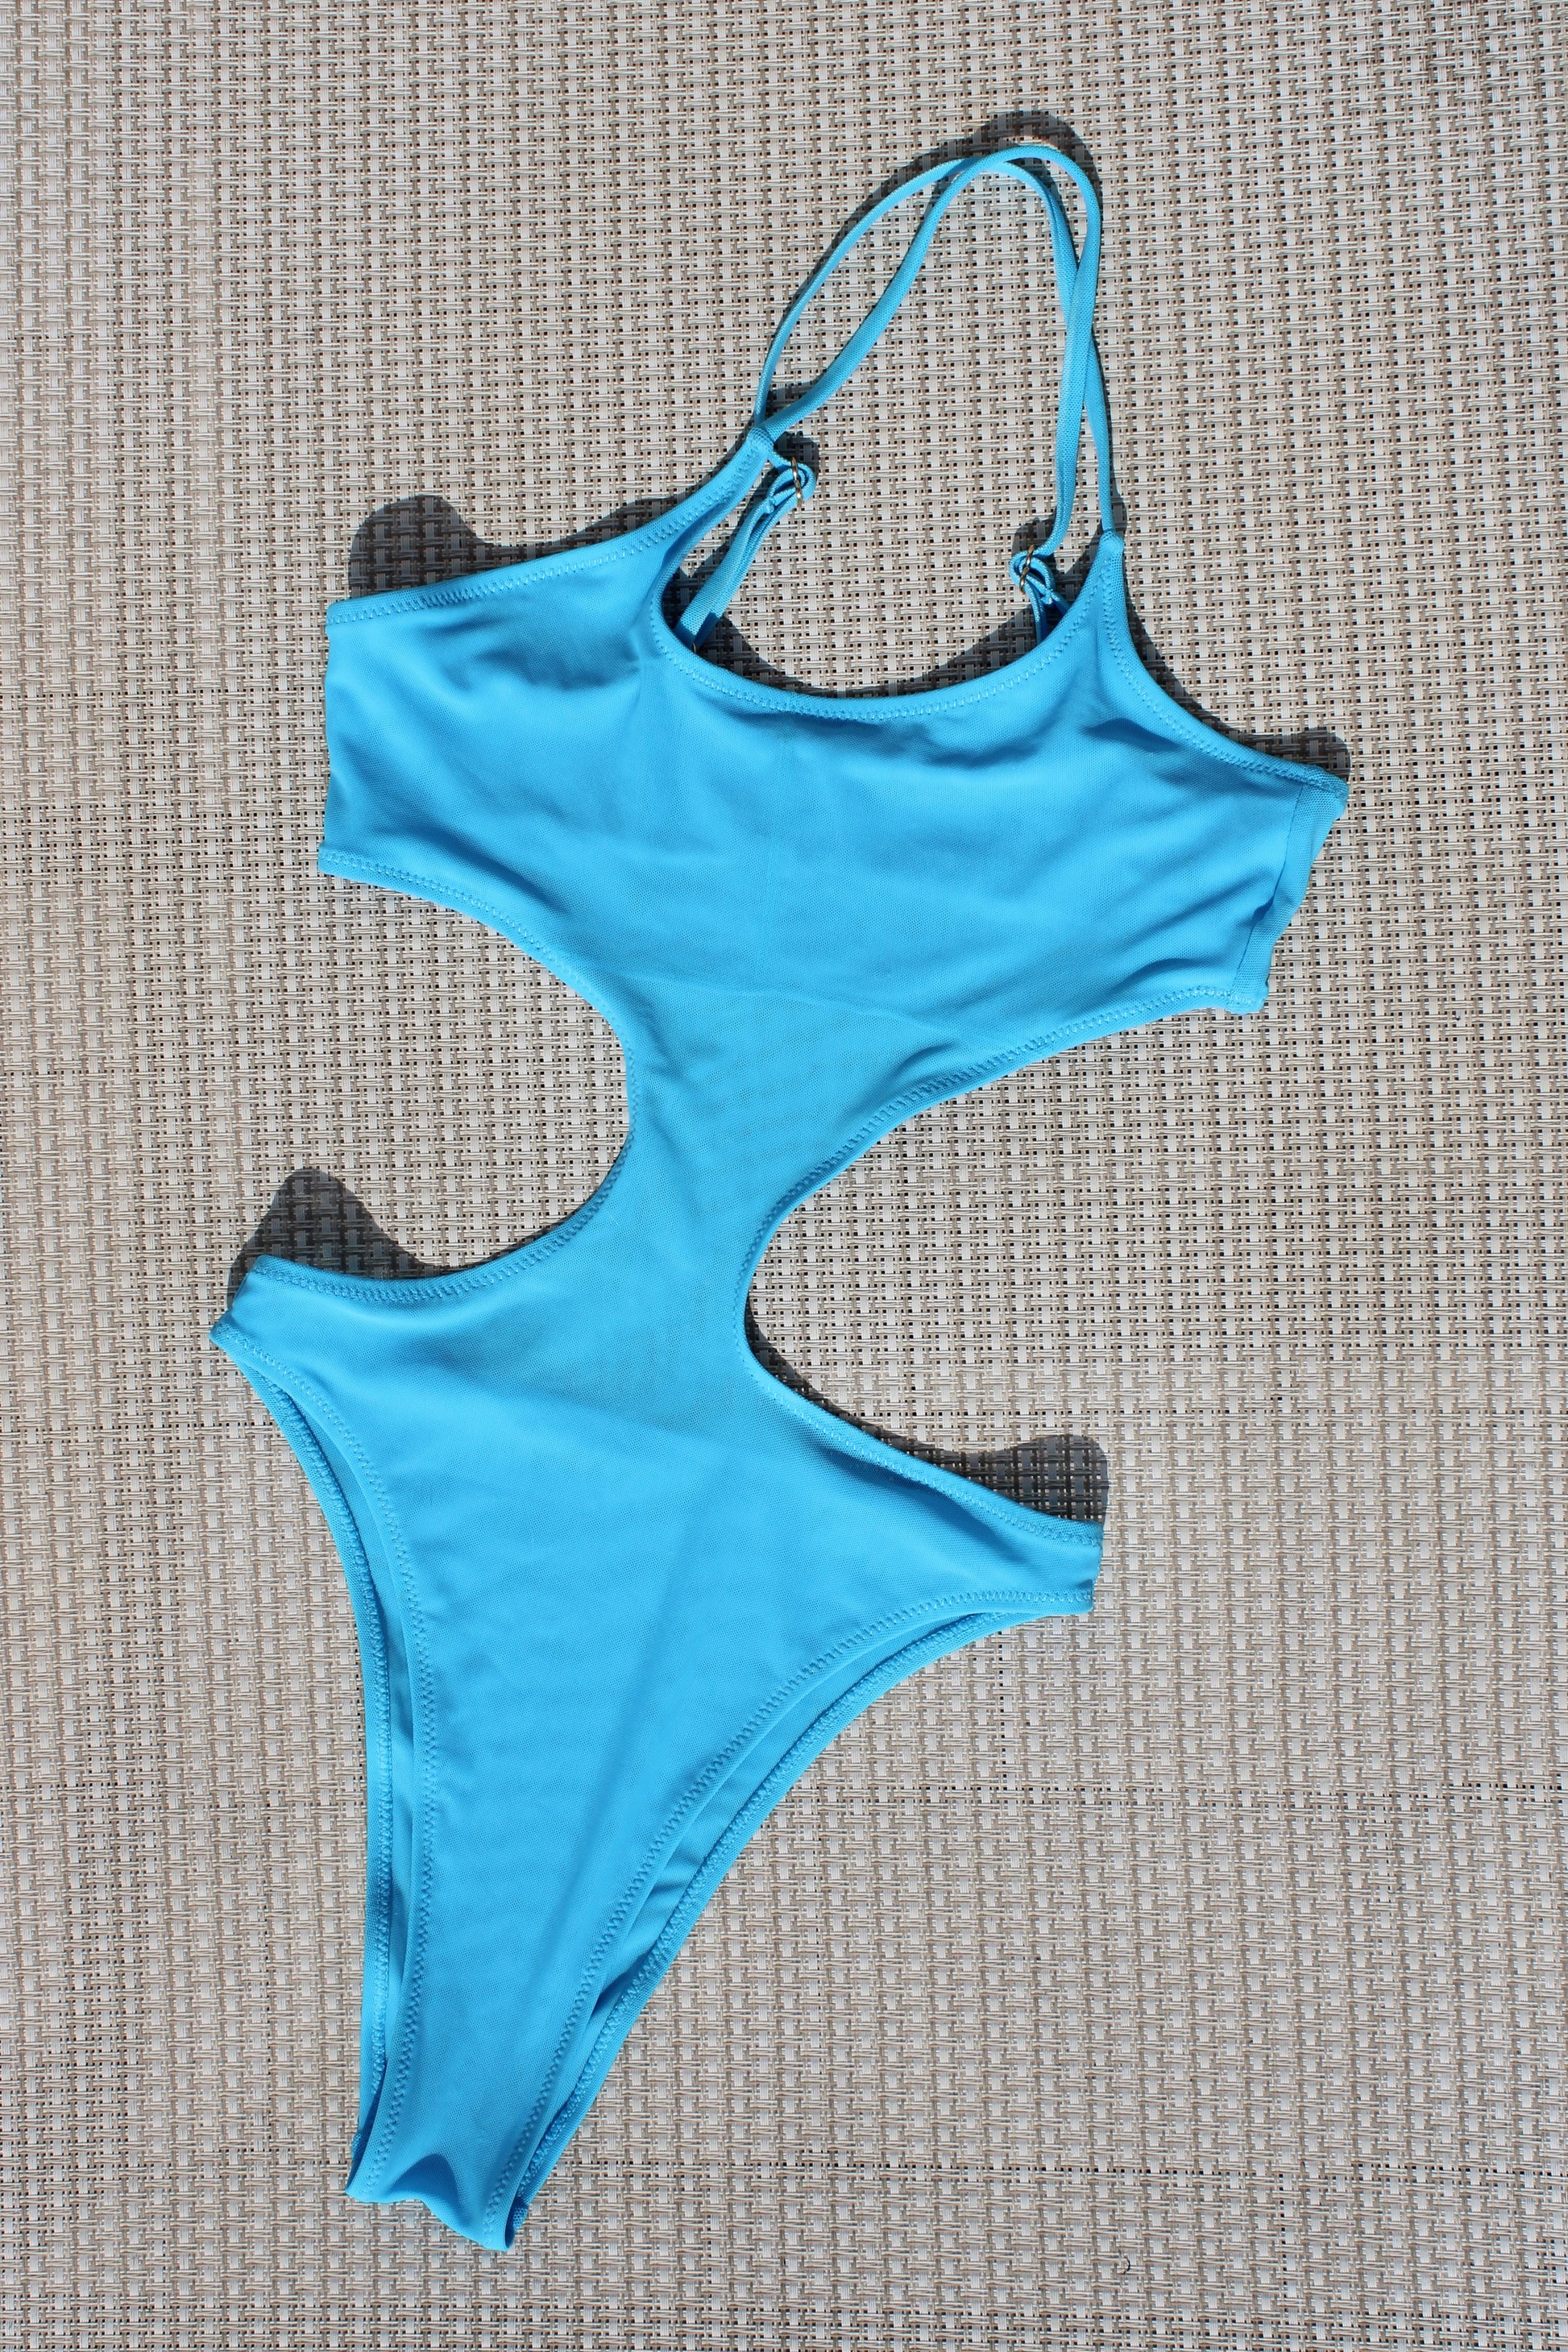 Sun-imperial - navy blue sport bra bikini set with lemon print detail –  Sun-Imperial